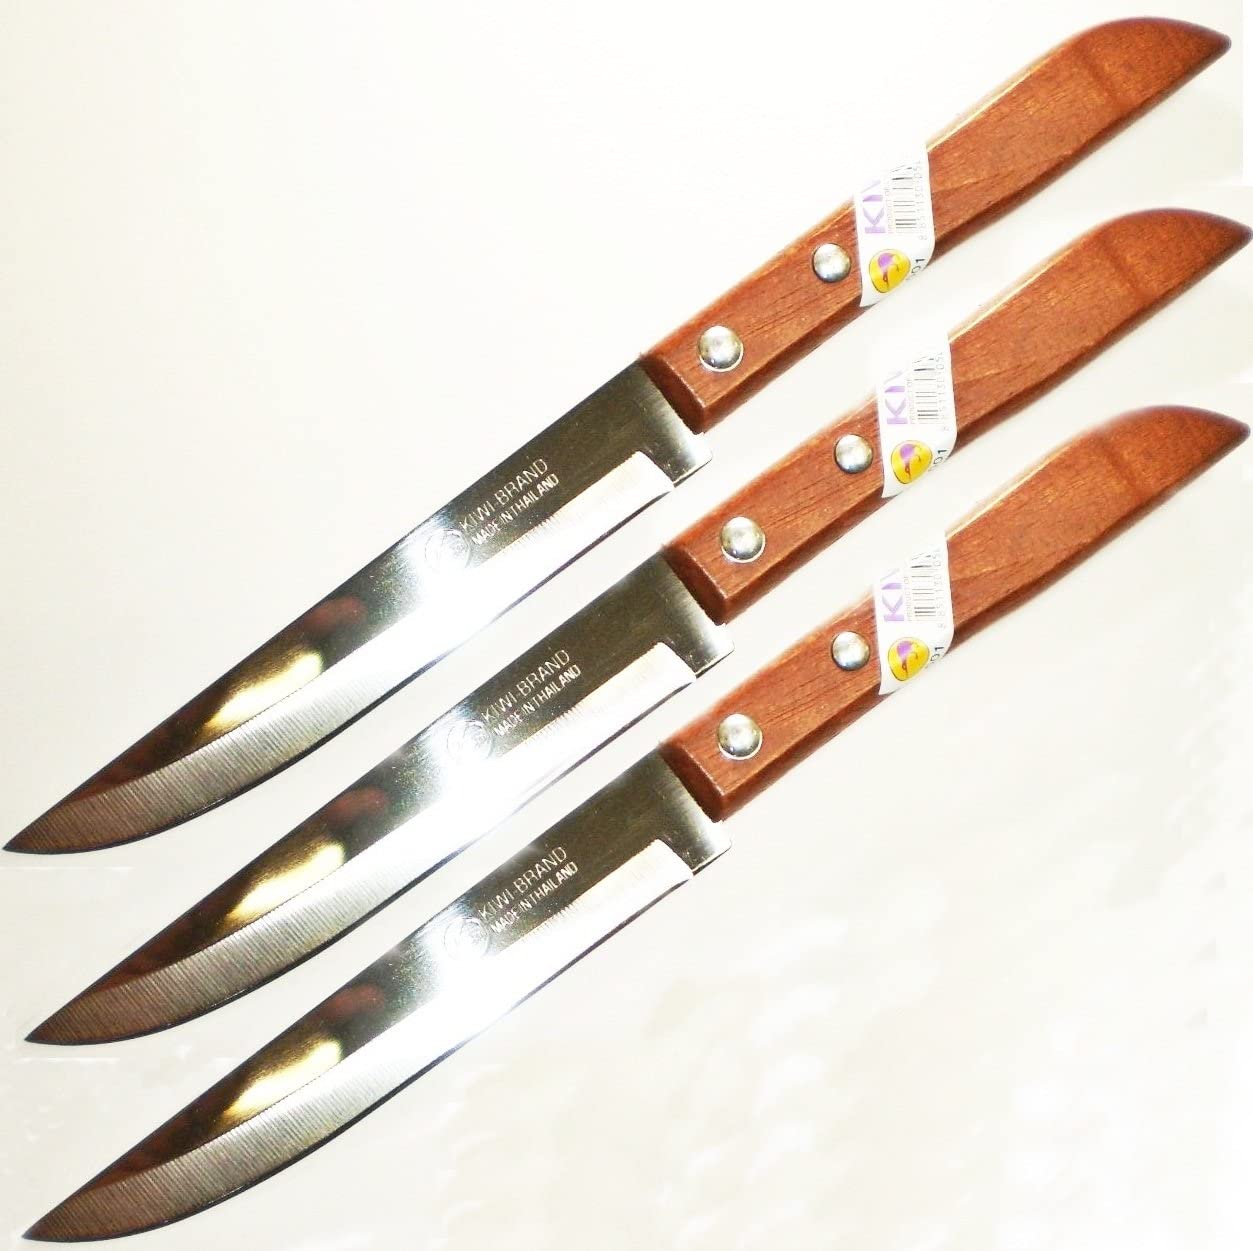 Set of 3 KIWI Stainless Steel Knives, wood handle # 501